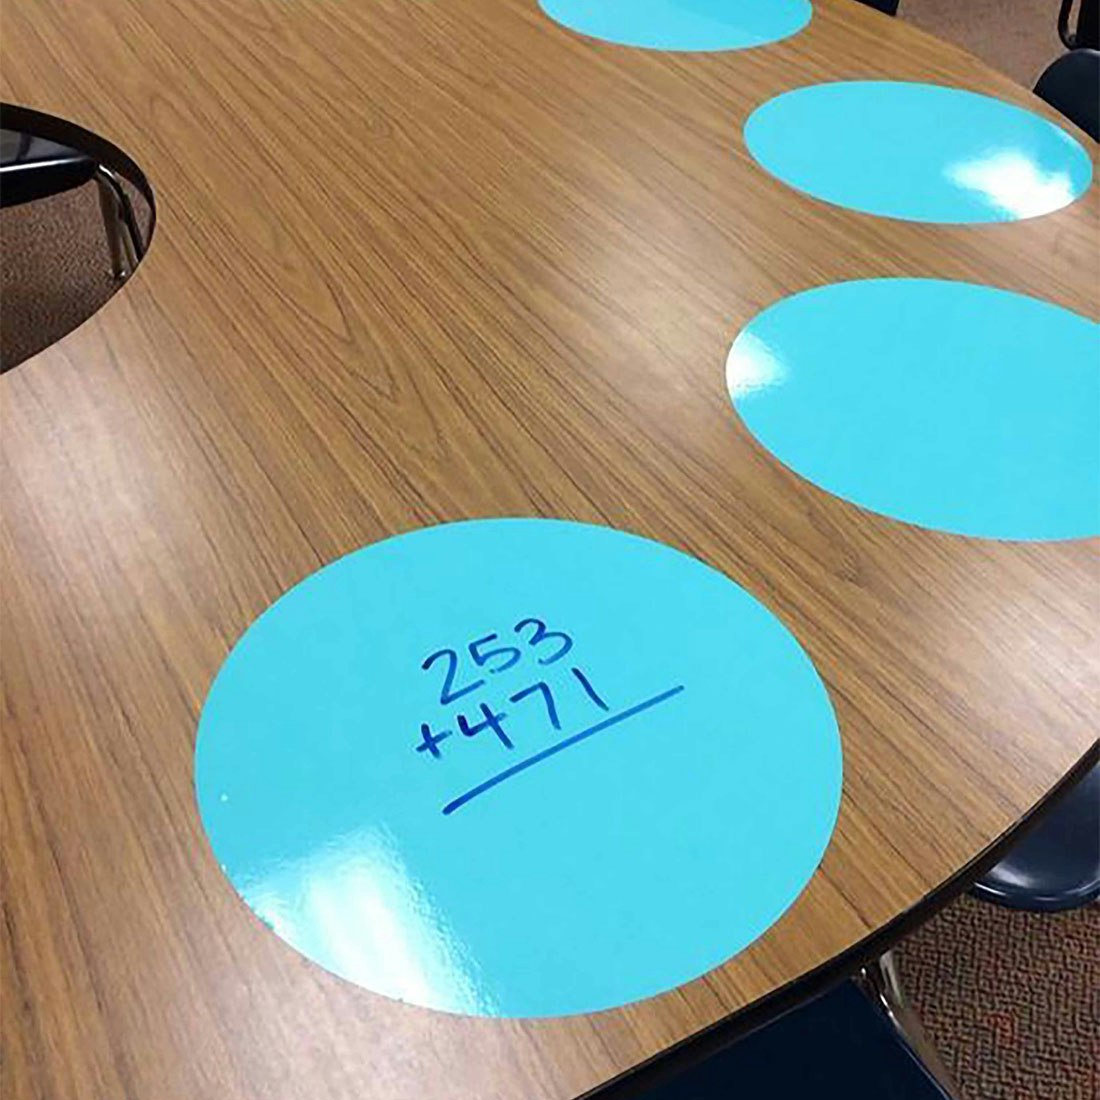 math-problems-written-on-blue-place-mats-on-table.jpg